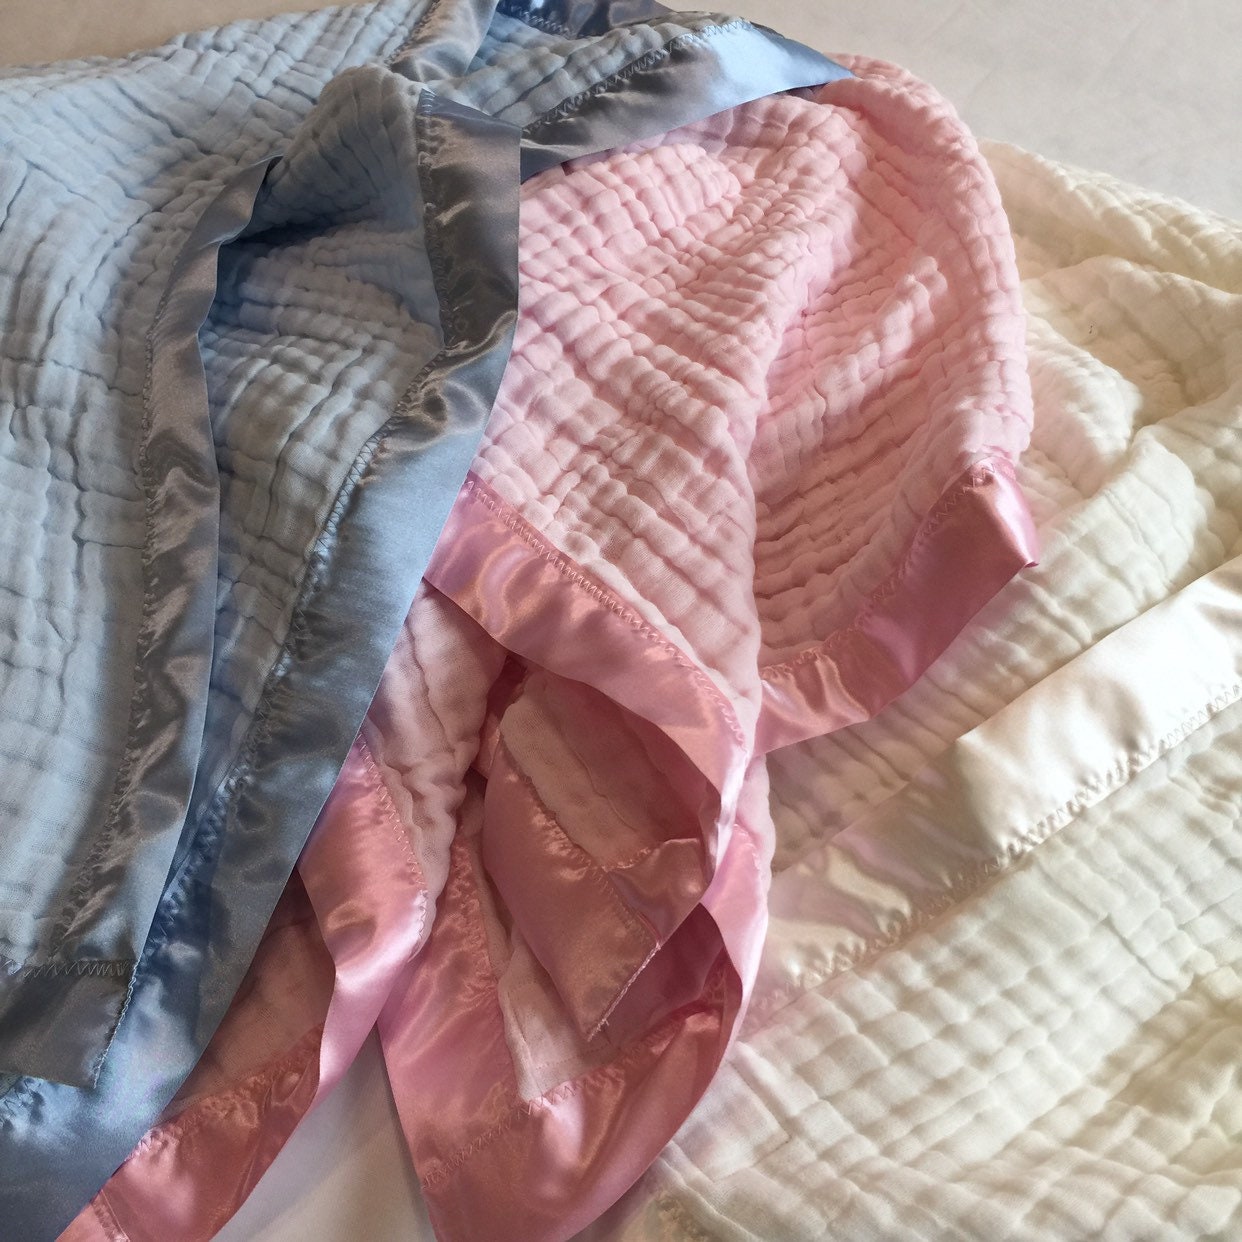 Blanket Binding Wrights Fancy Printed Ombré Tie Dye PC798